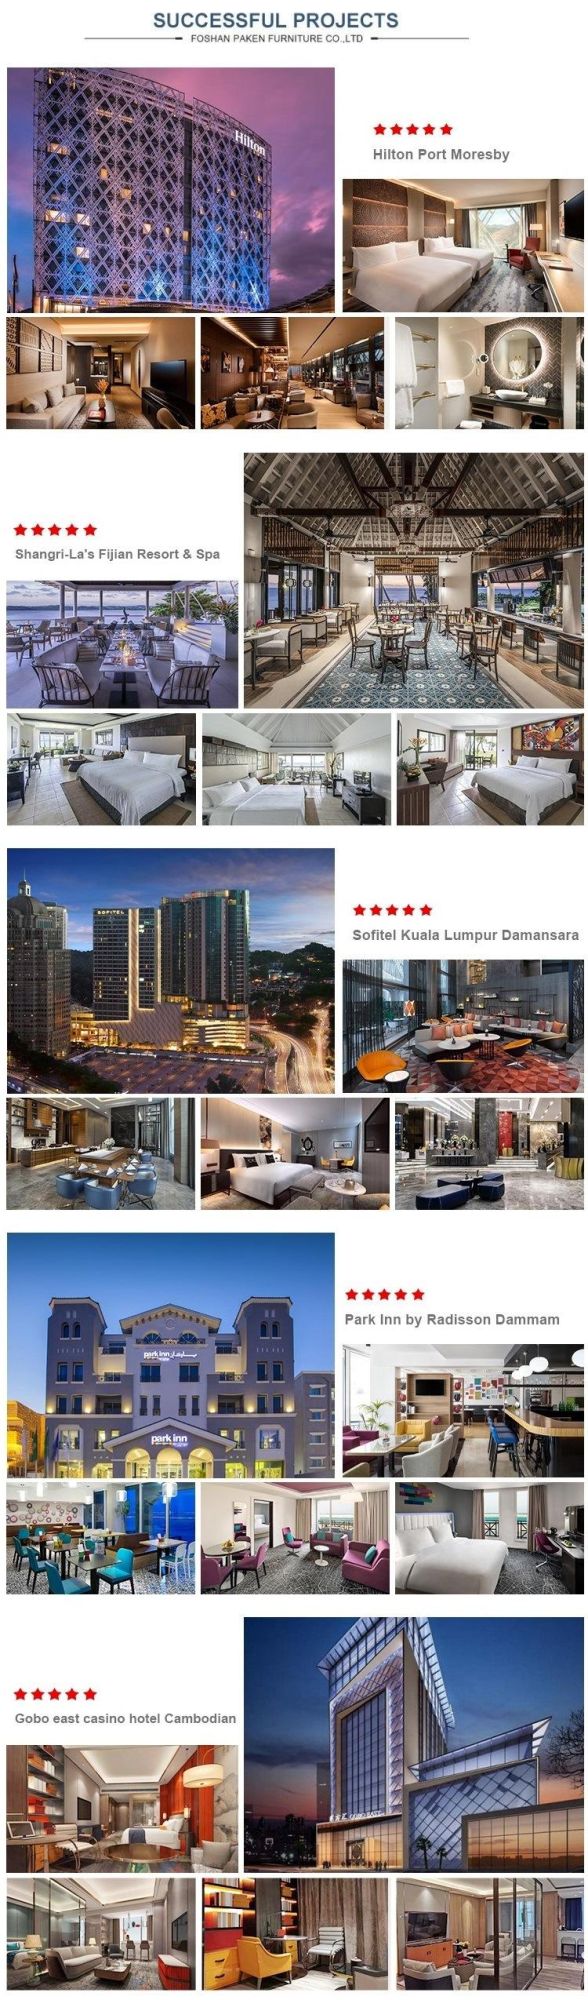 Chinese Manufacturer Five Star Hotel Bedroom Set furniture for Sale